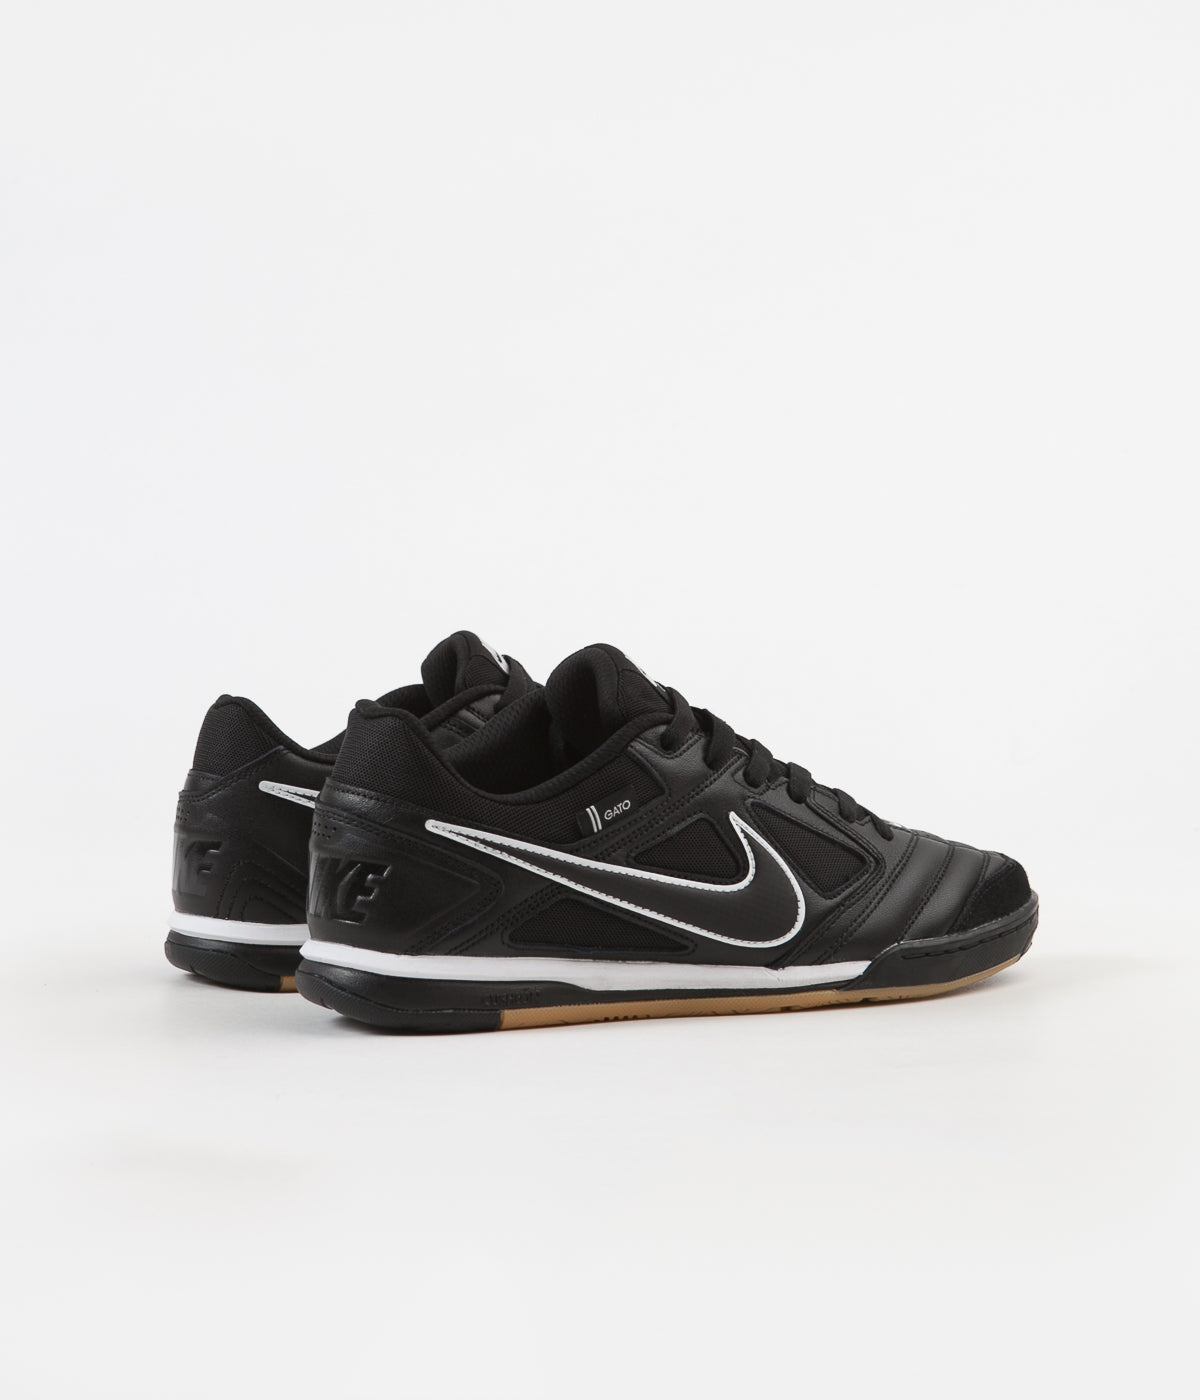 Nike SB Gato - Black / Black - White - Gum Light Brown | Flatspot